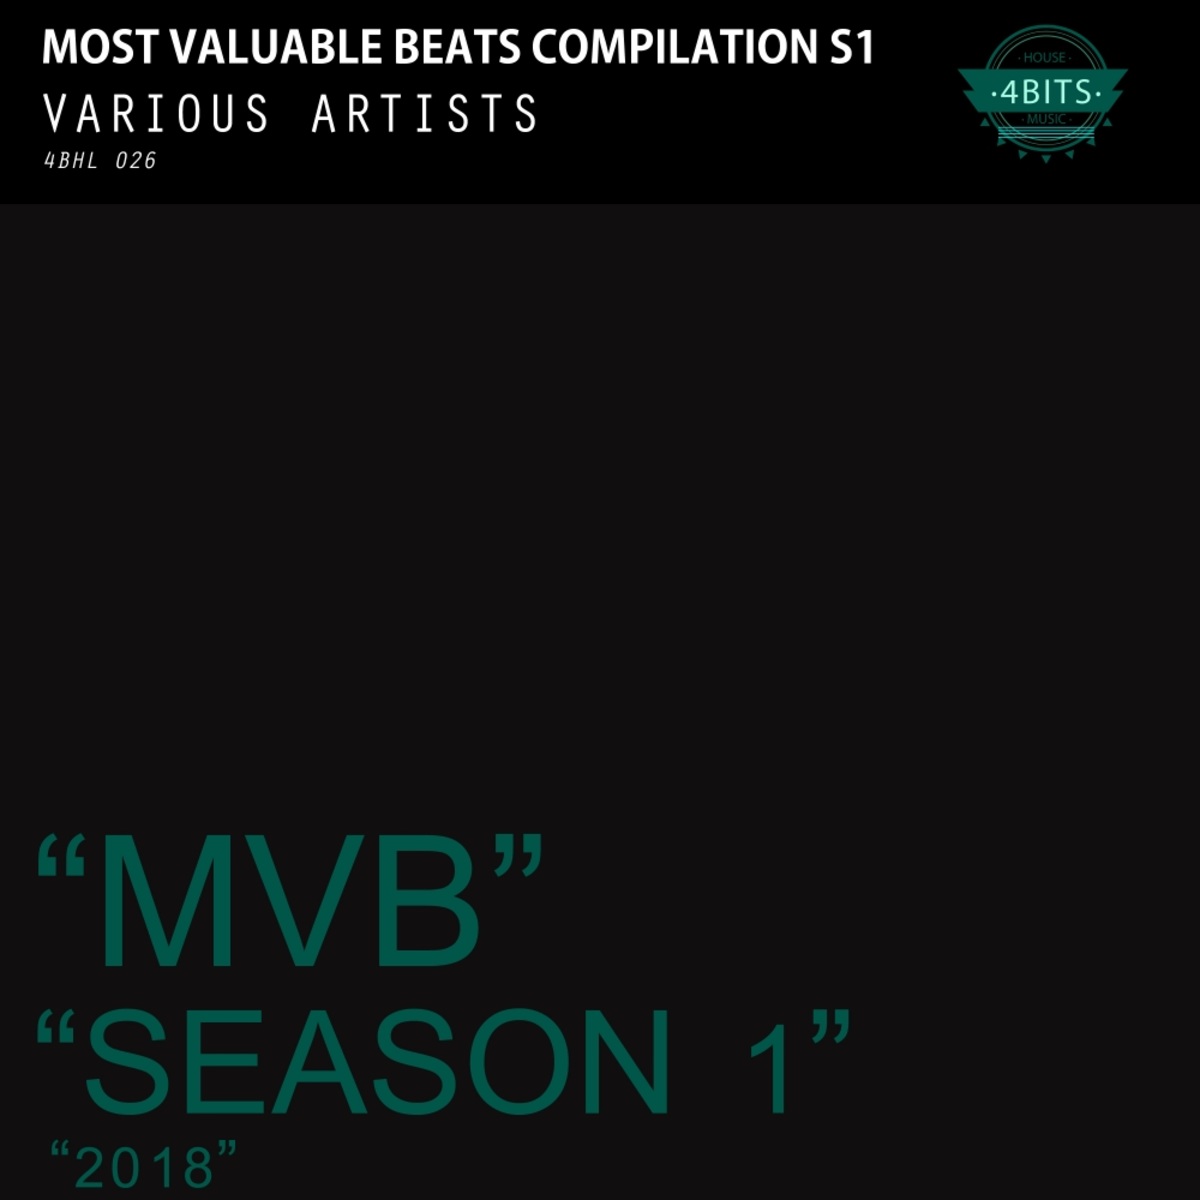 VA - Most Valuable Beats: Season 1 (2018) / 4 Bits House Music